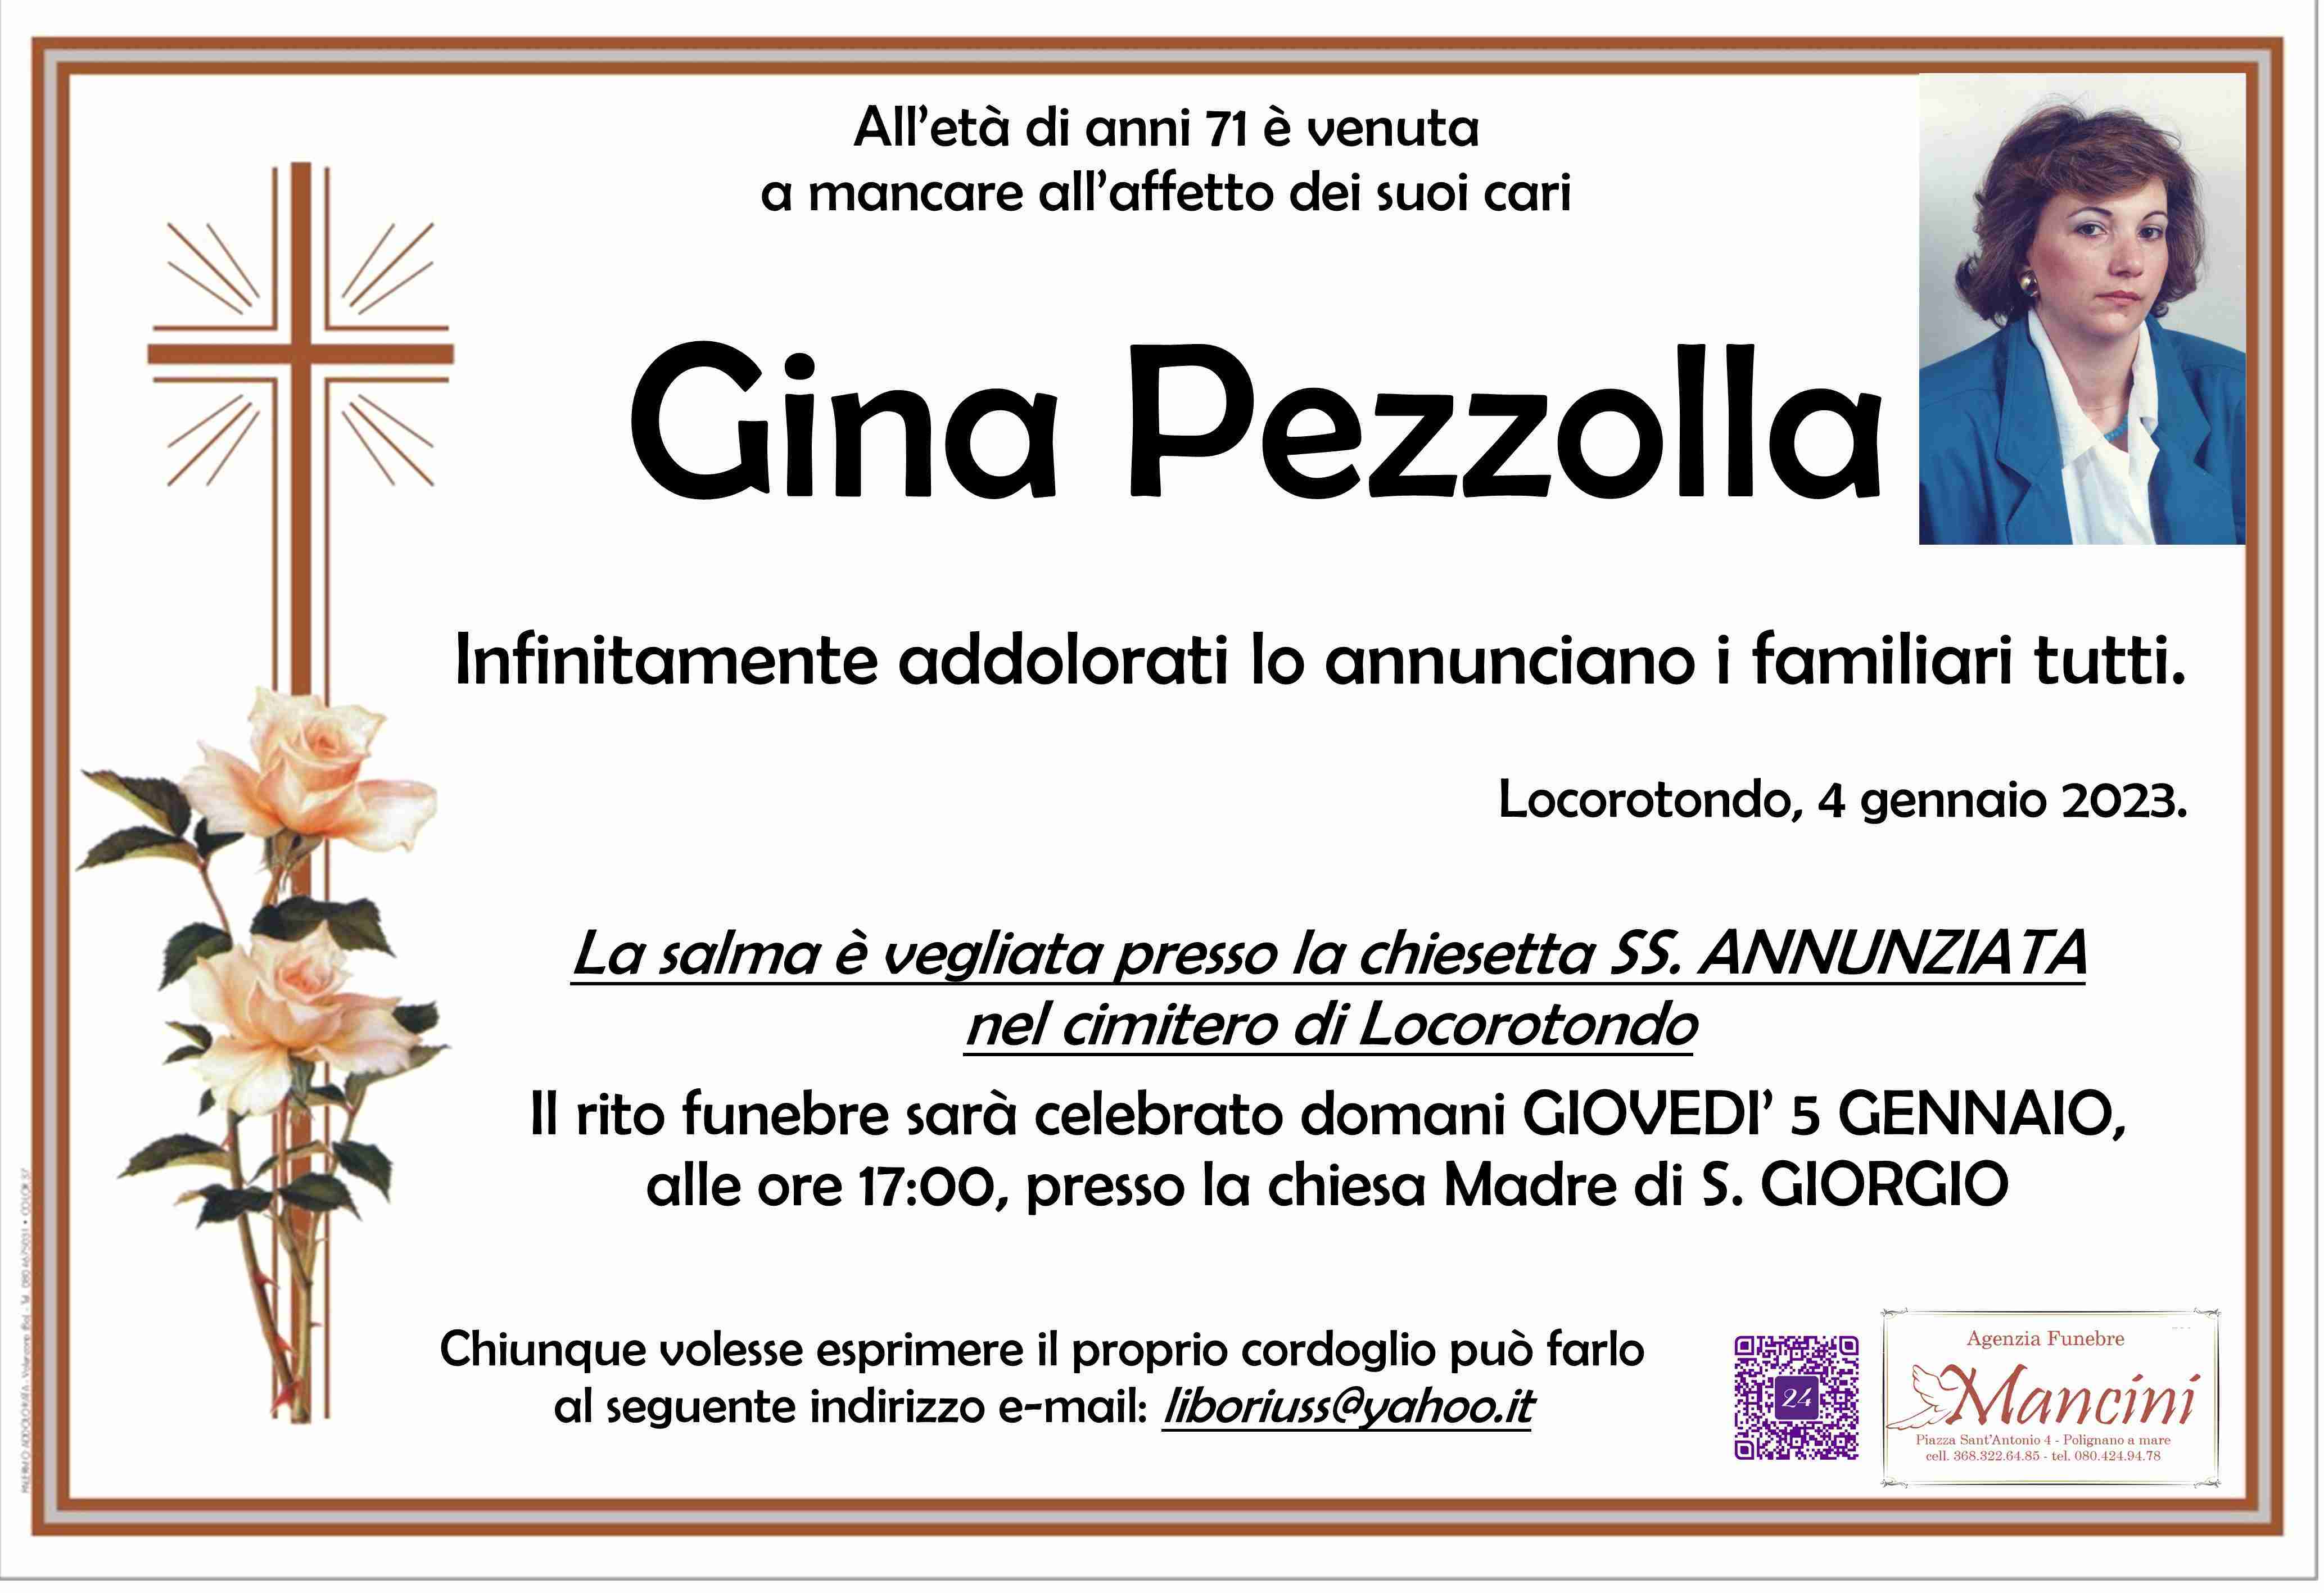 Gina Pezzolla